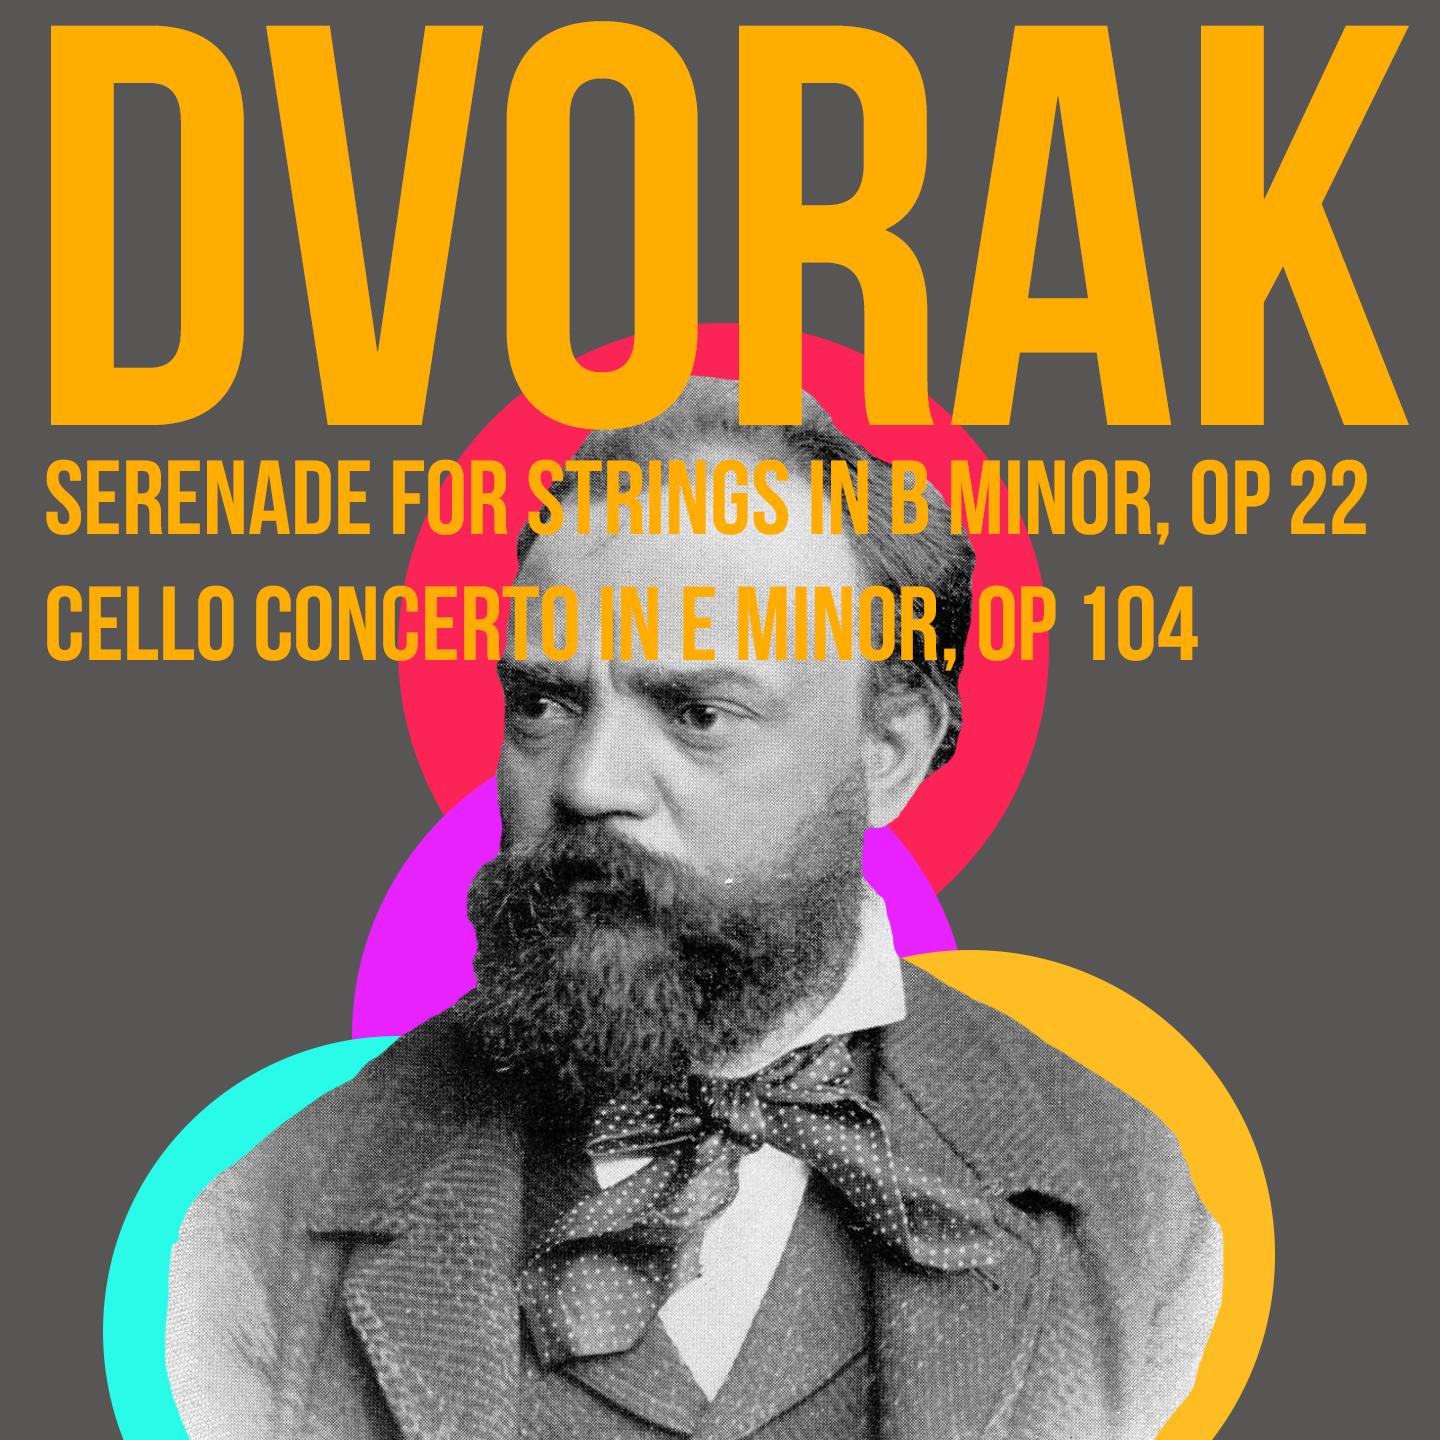 Dvorak Serenade For Strings In B Minor, Op22 & Cello Concerto In E Minor, Op104